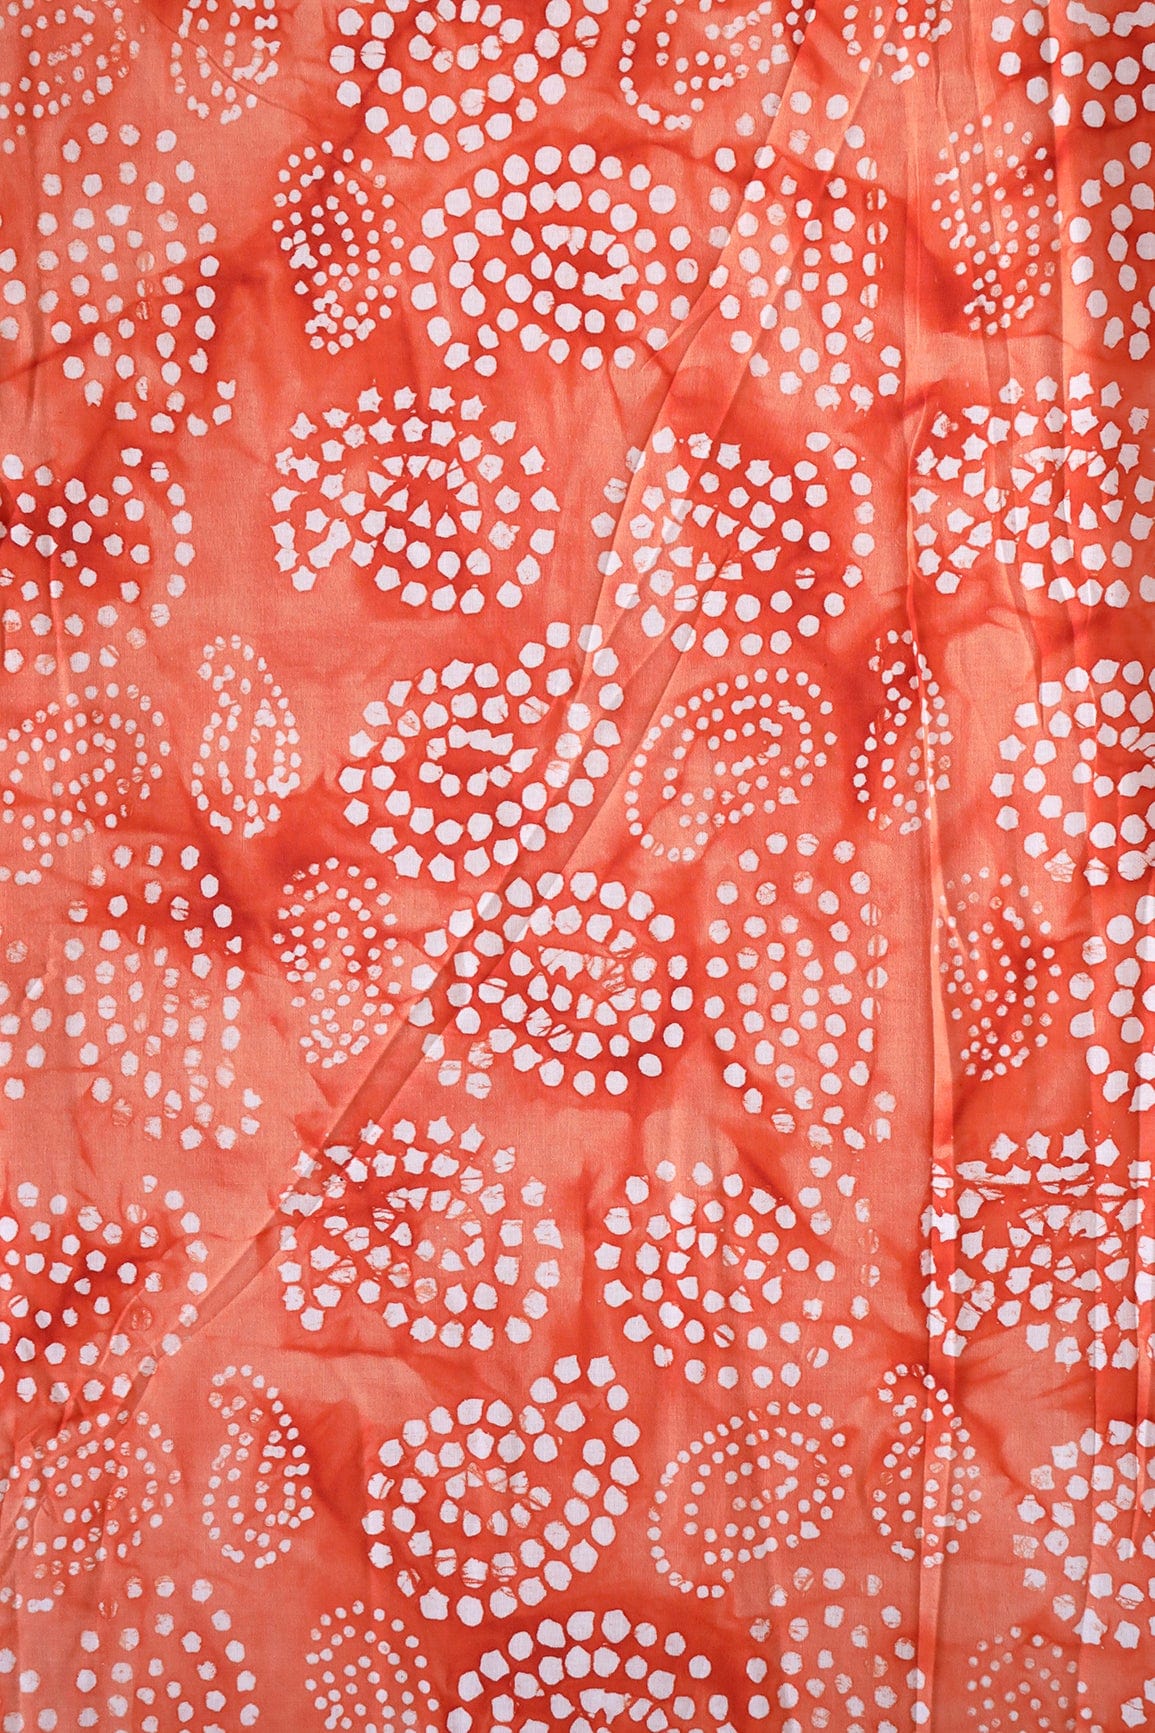 doeraa Prints White And Orange Paisley Pattern Batik Handblock Organic Cotton Fabric